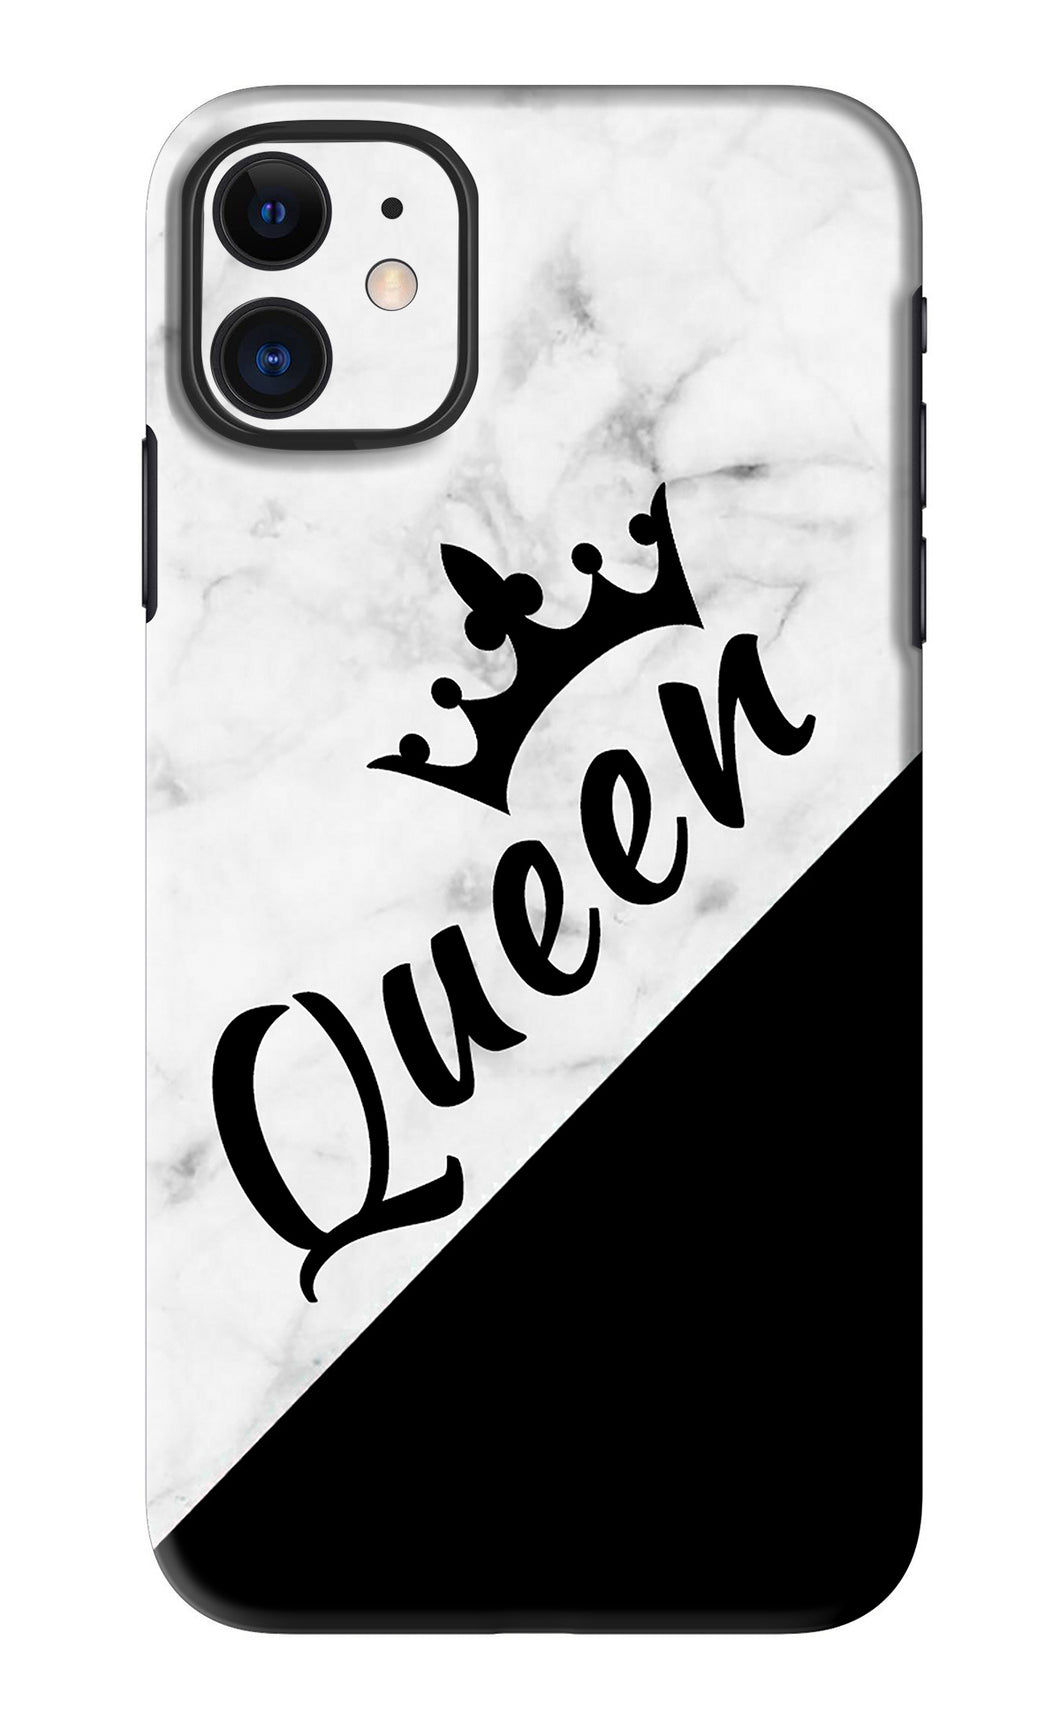 Queen iPhone 11 Back Skin Wrap